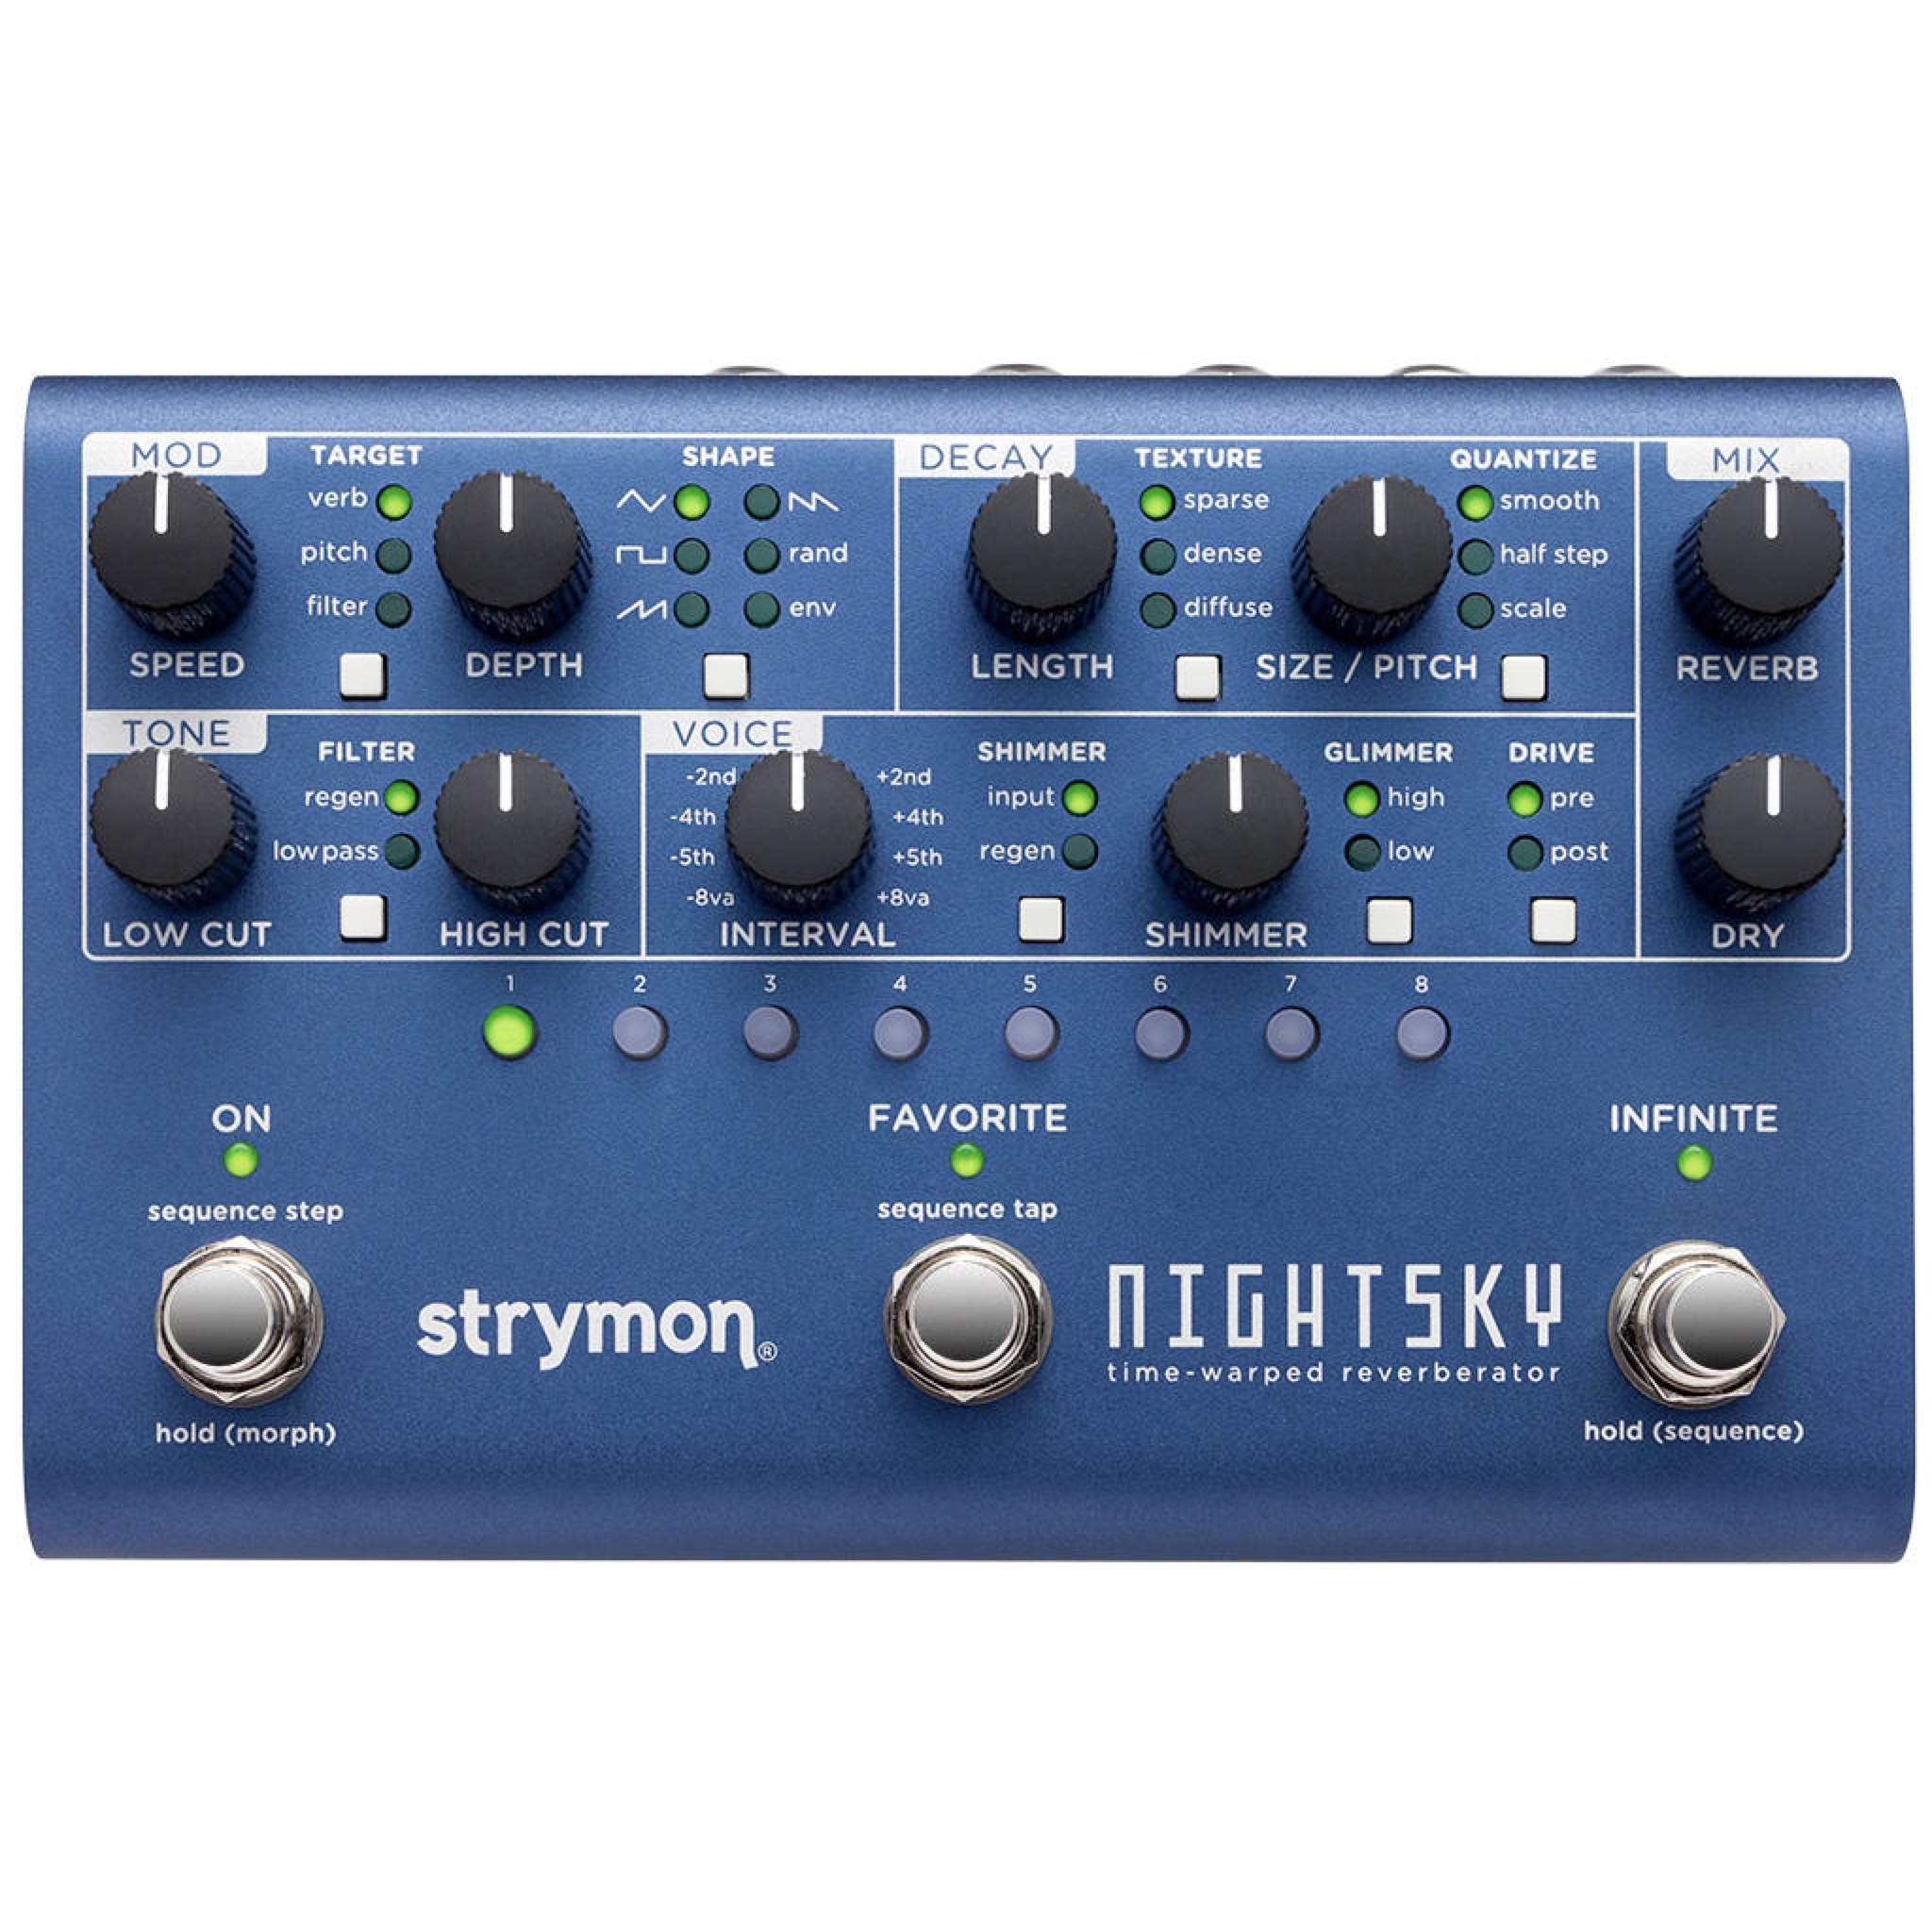 Strymon Nightsky Time-Warped Experimental Reverberator